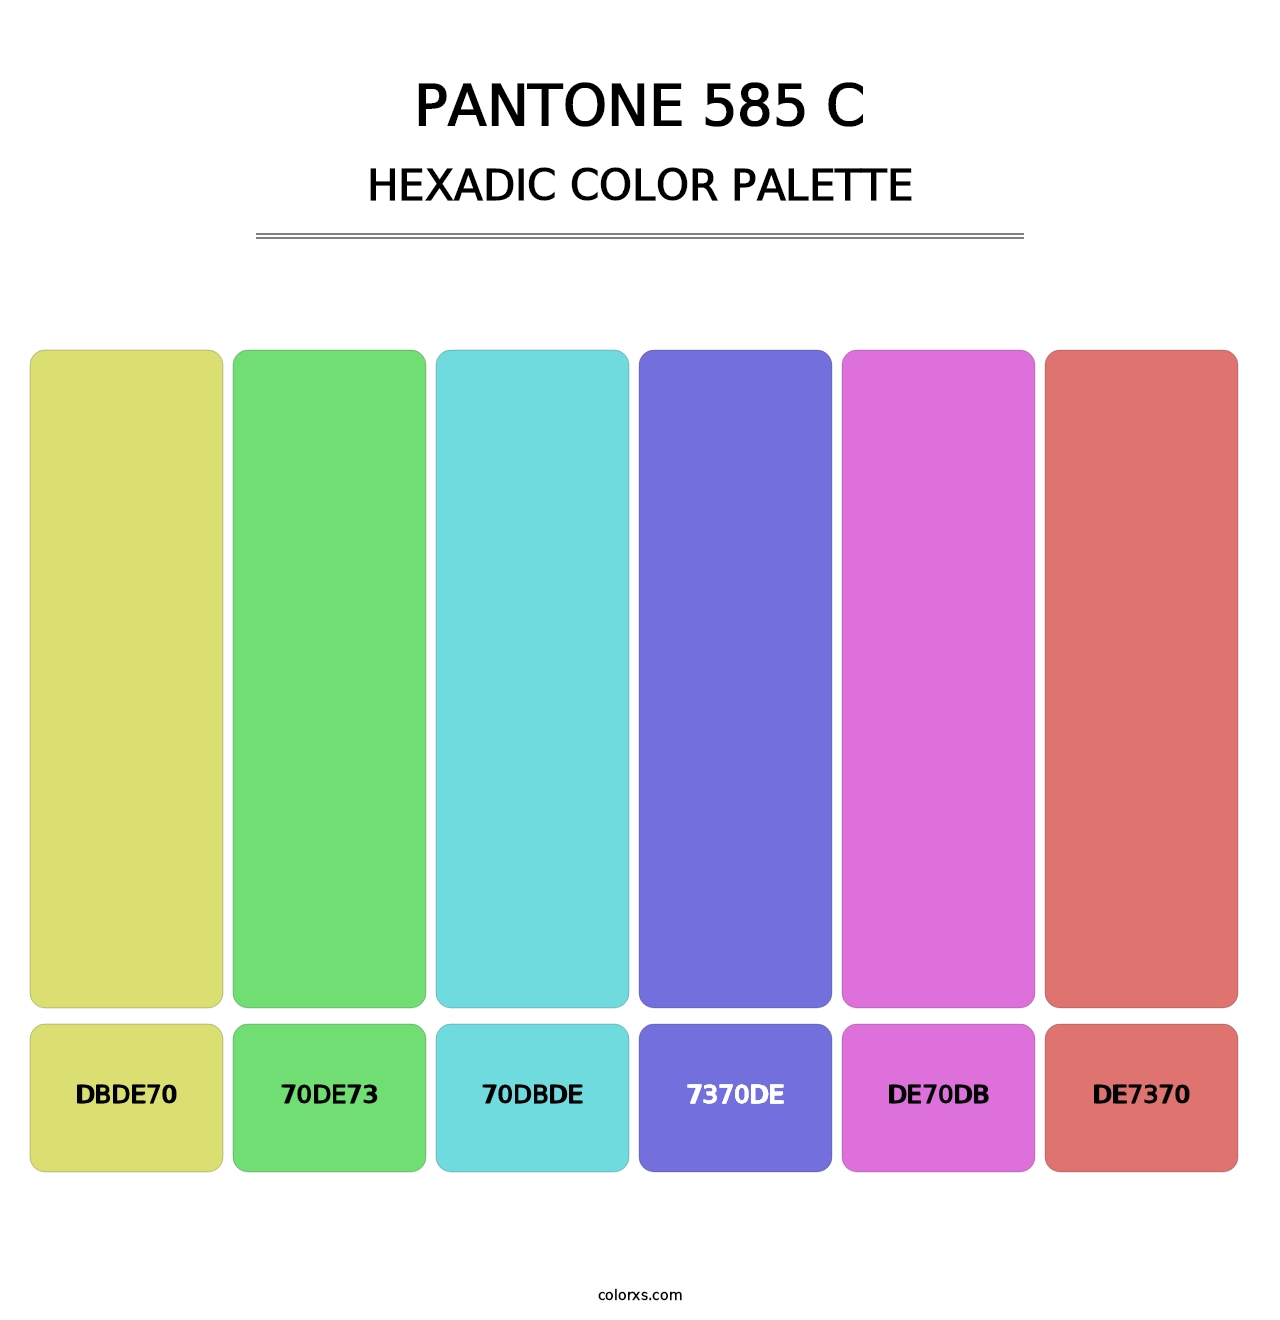 PANTONE 585 C - Hexadic Color Palette